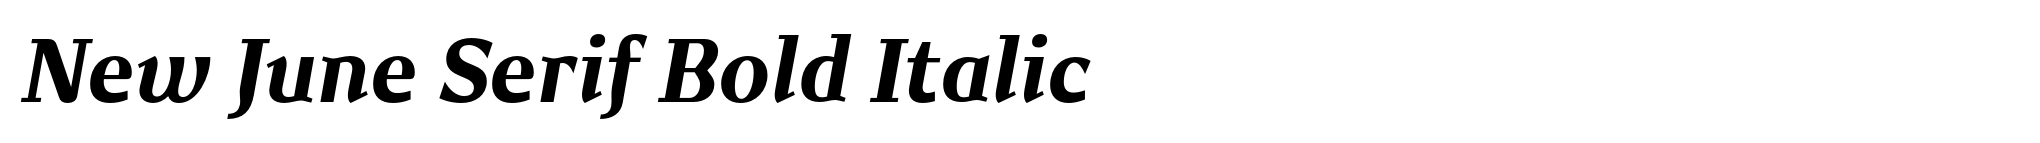 New June Serif Bold Italic image